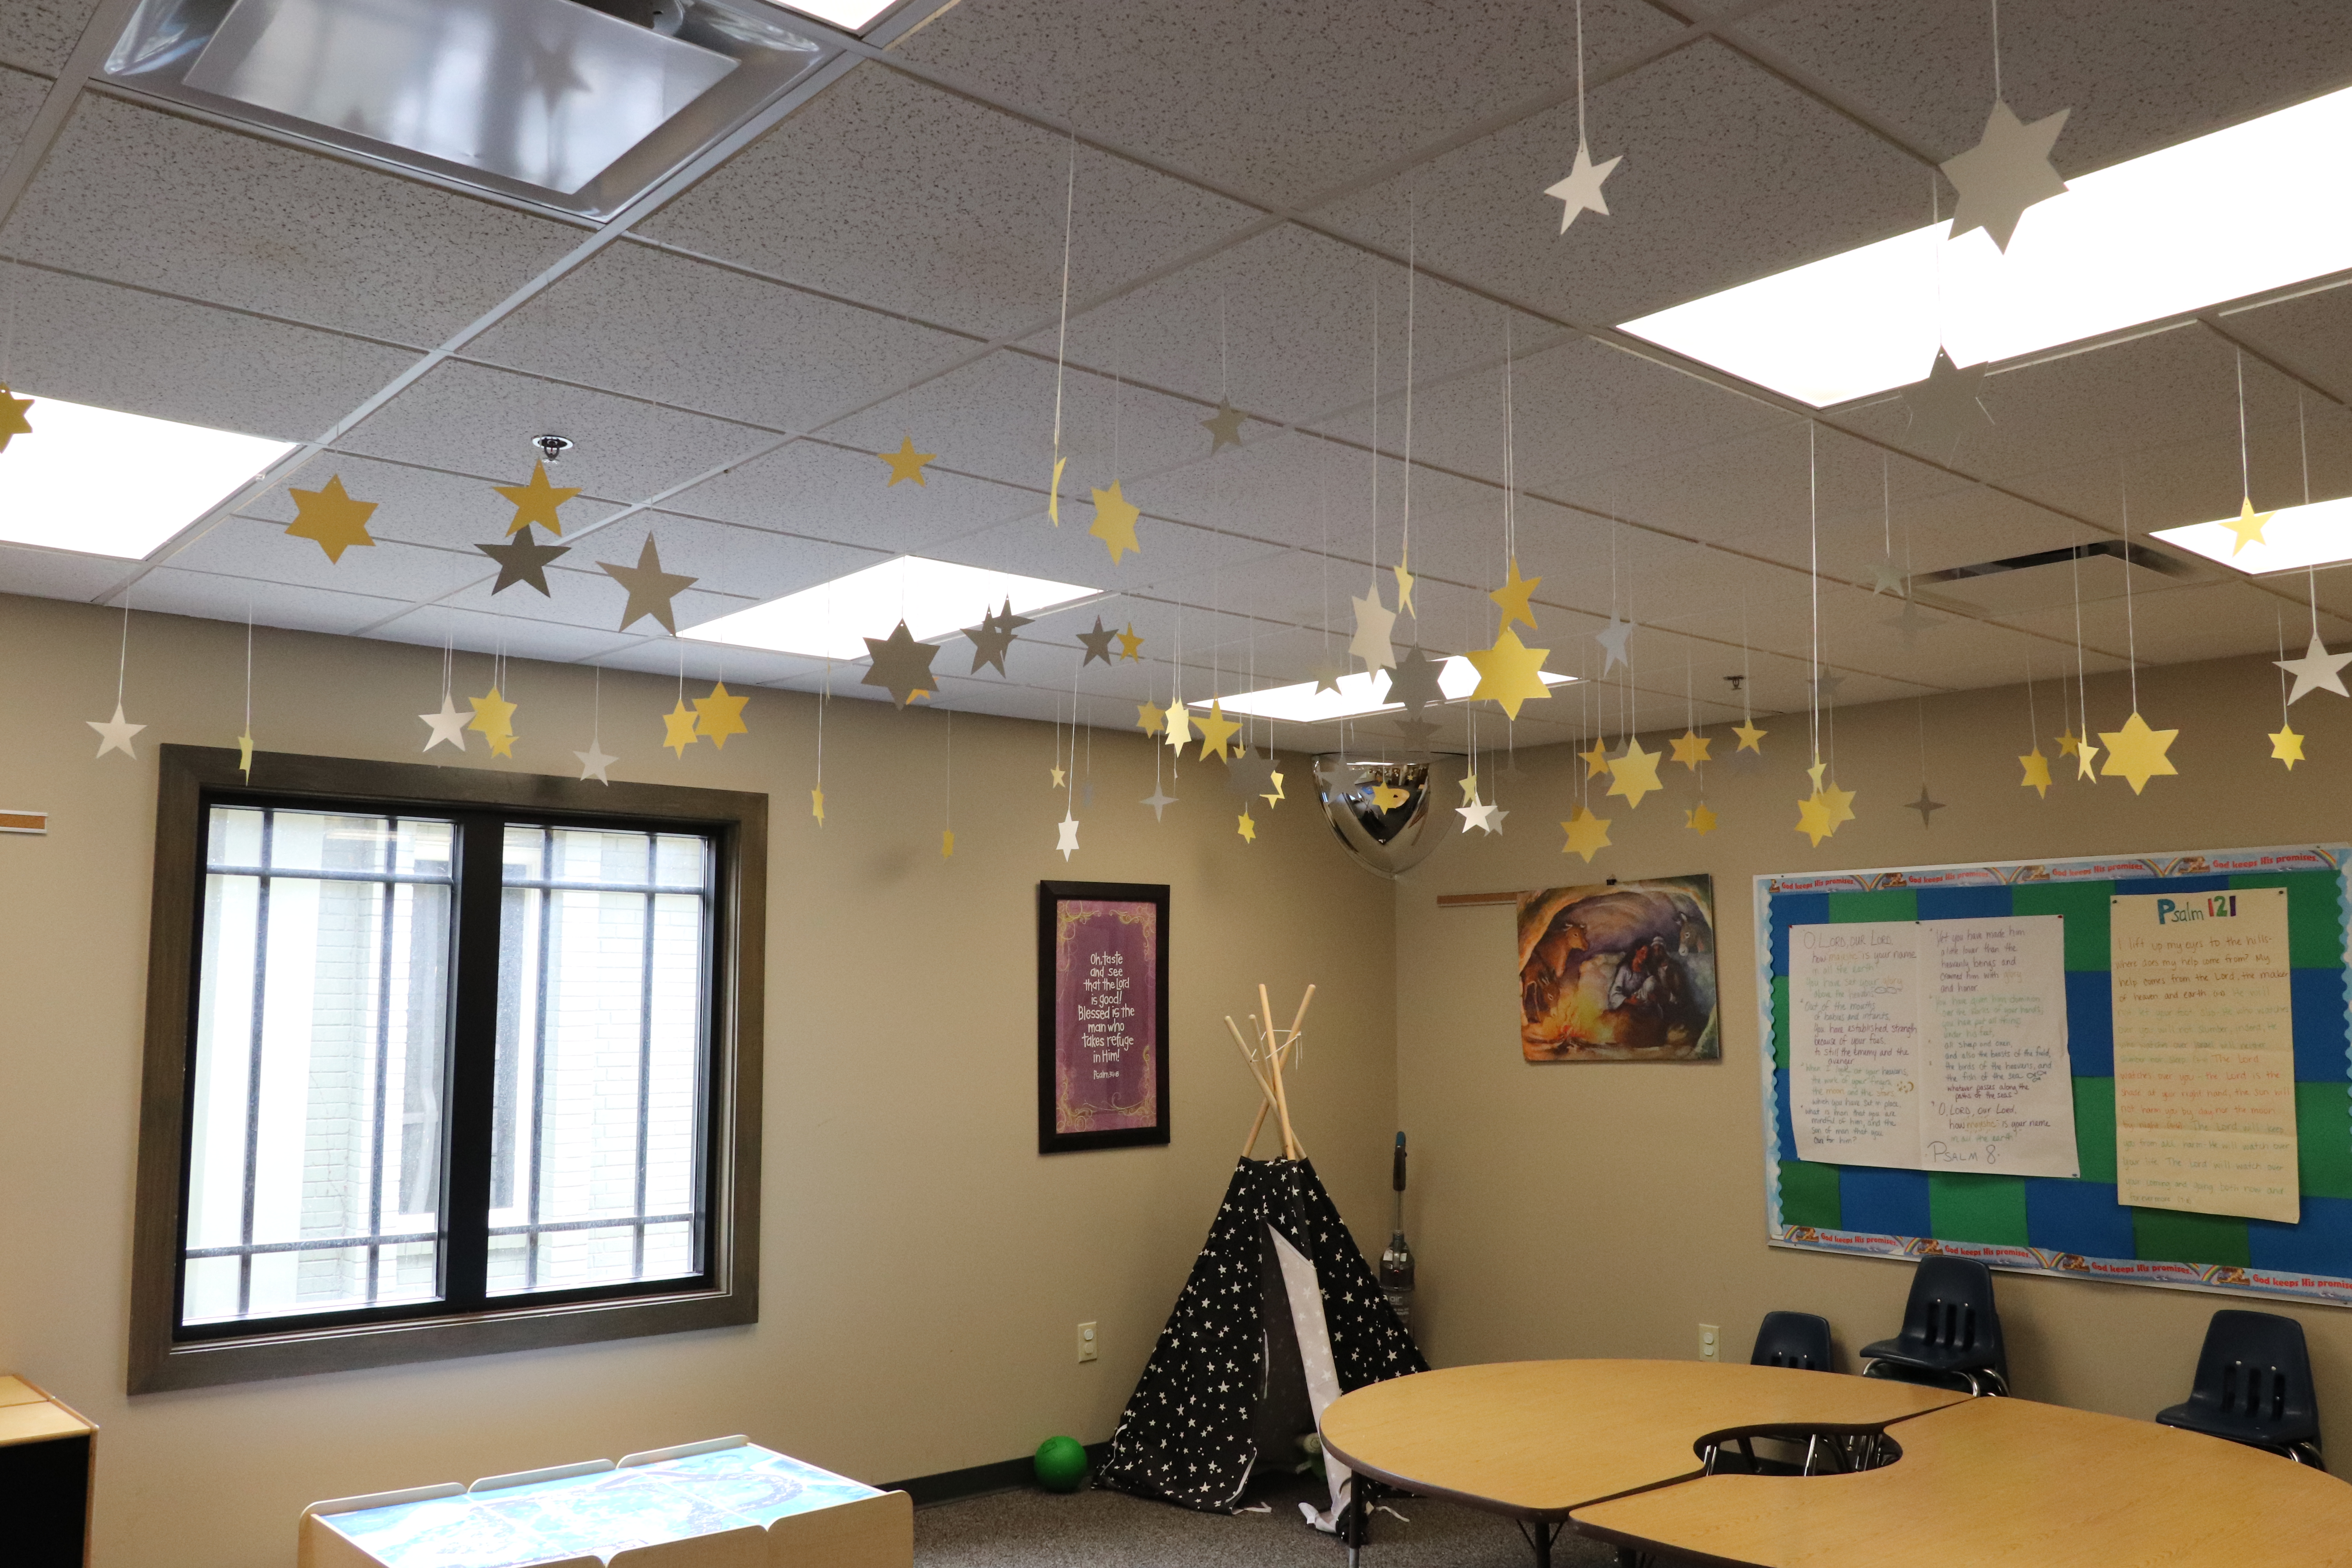 children's ministry room designs hanging stars